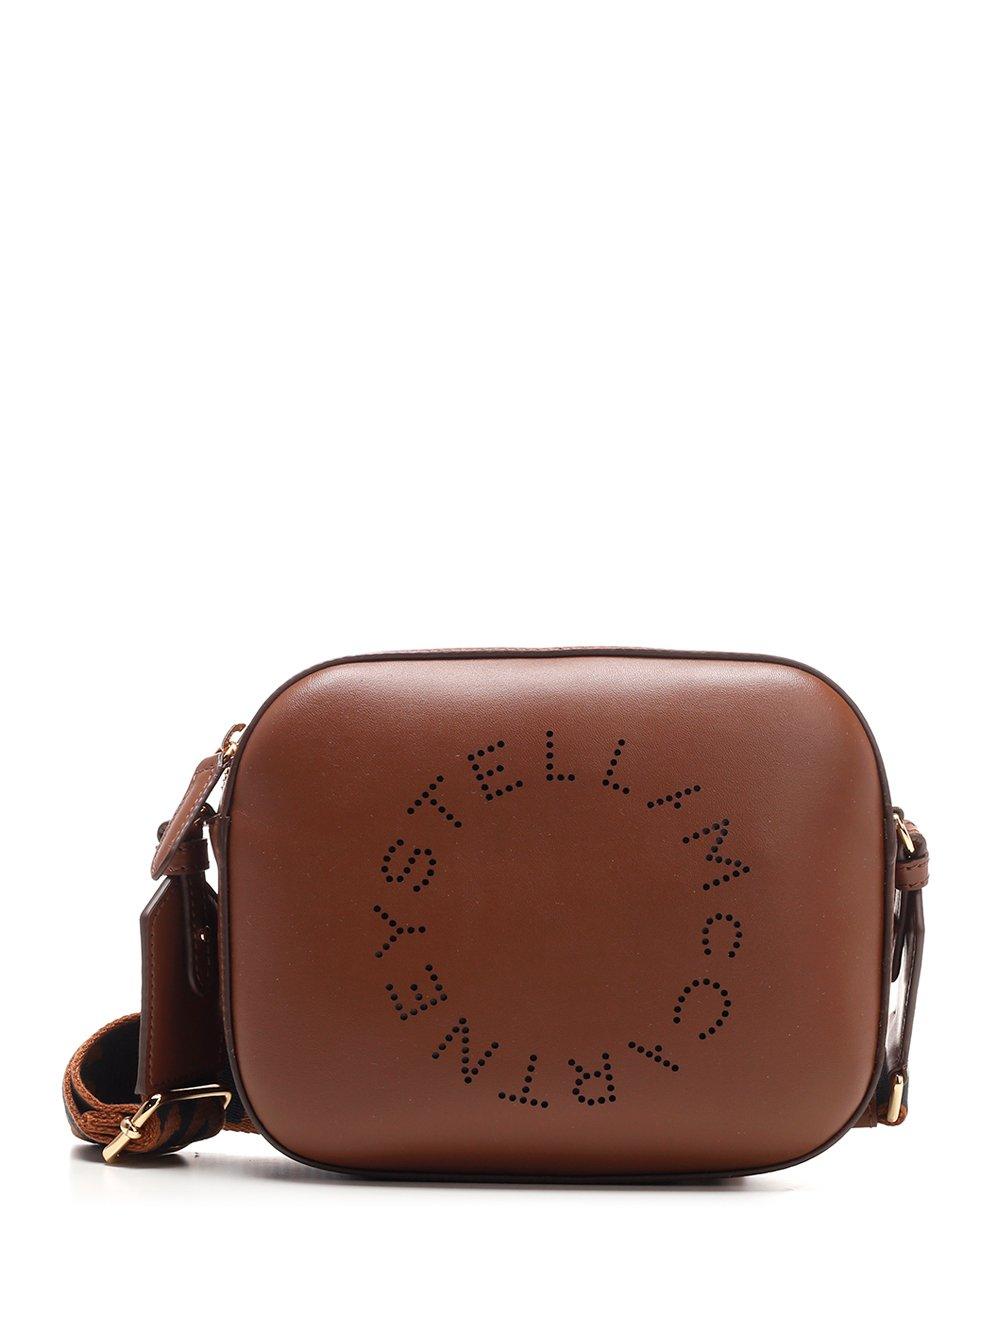 Stella McCartney Synthetic Logo Mini Crossbody Bag in Brown - Lyst